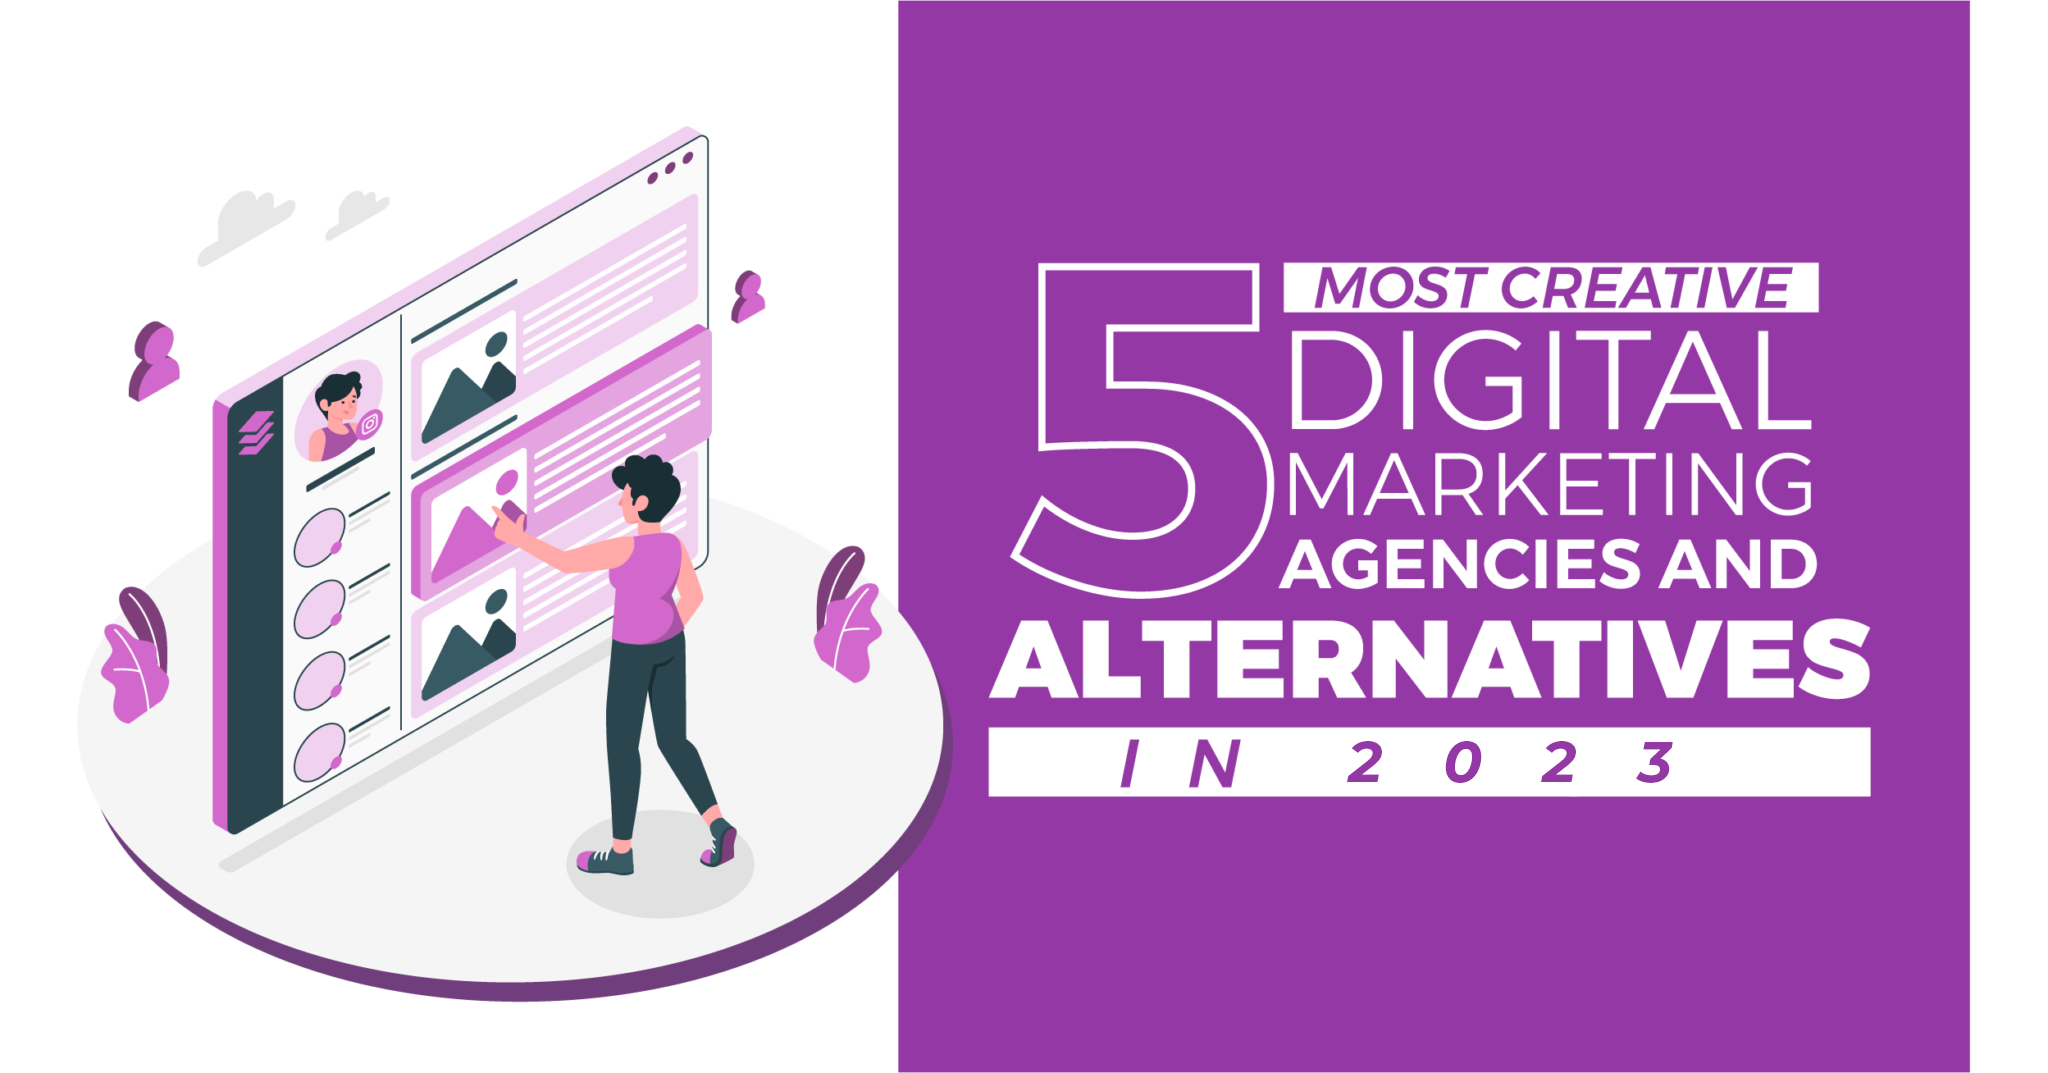 5 Most Creative Digital Marketing Agencies & Alternatives in 2023